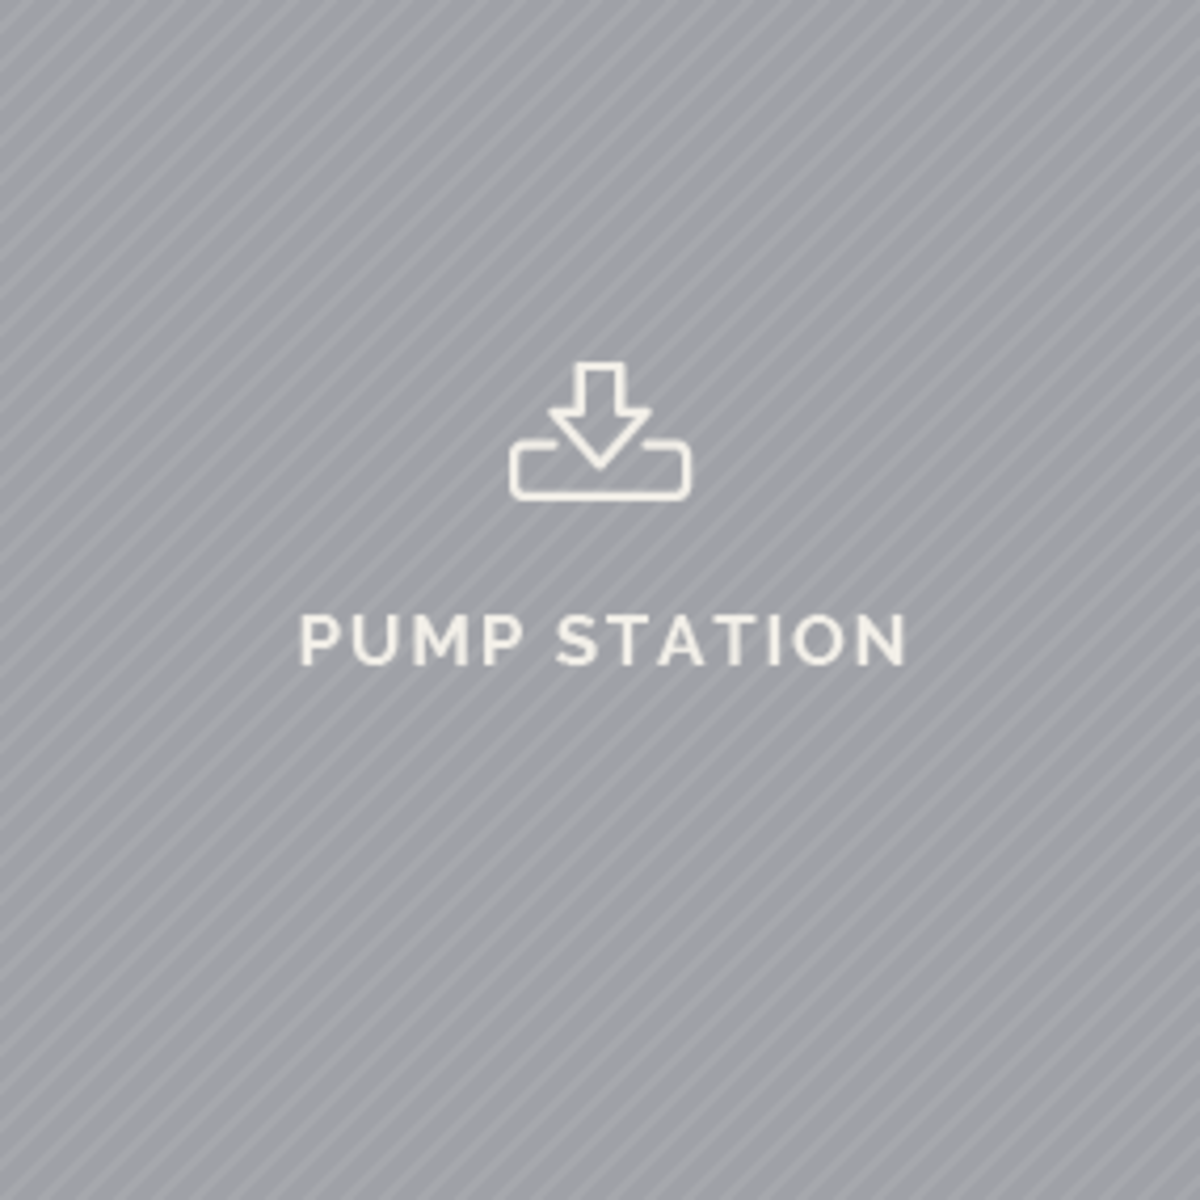 drawings pump station